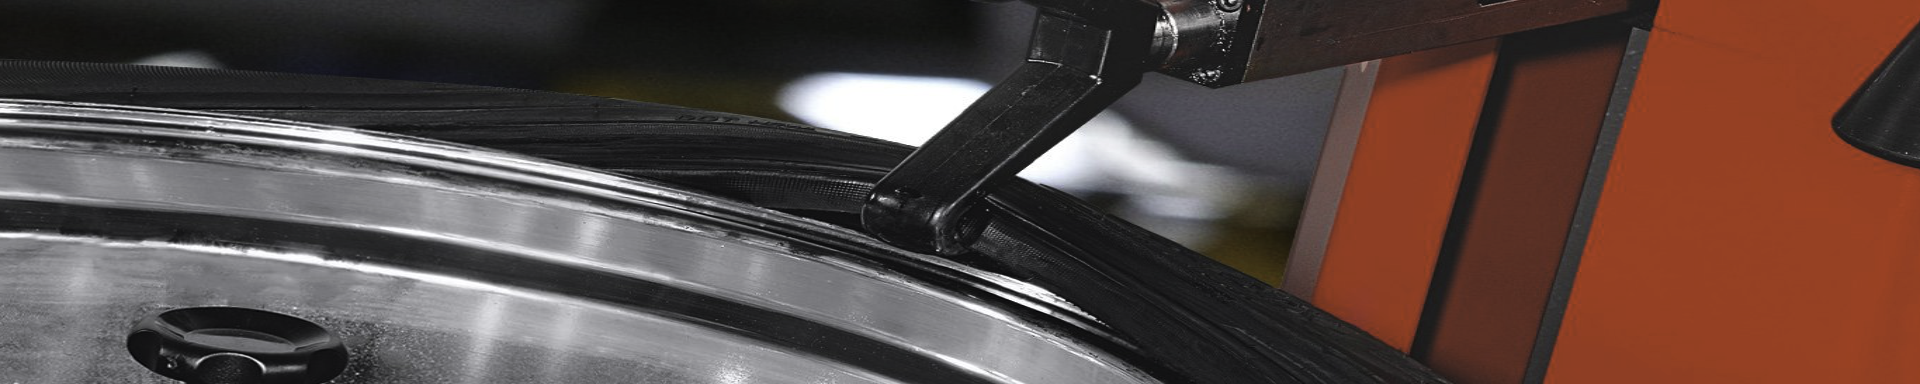 Tire Mounting & Demounting Tools | GarageAndFab.com | Munro Industries gf-100103081207